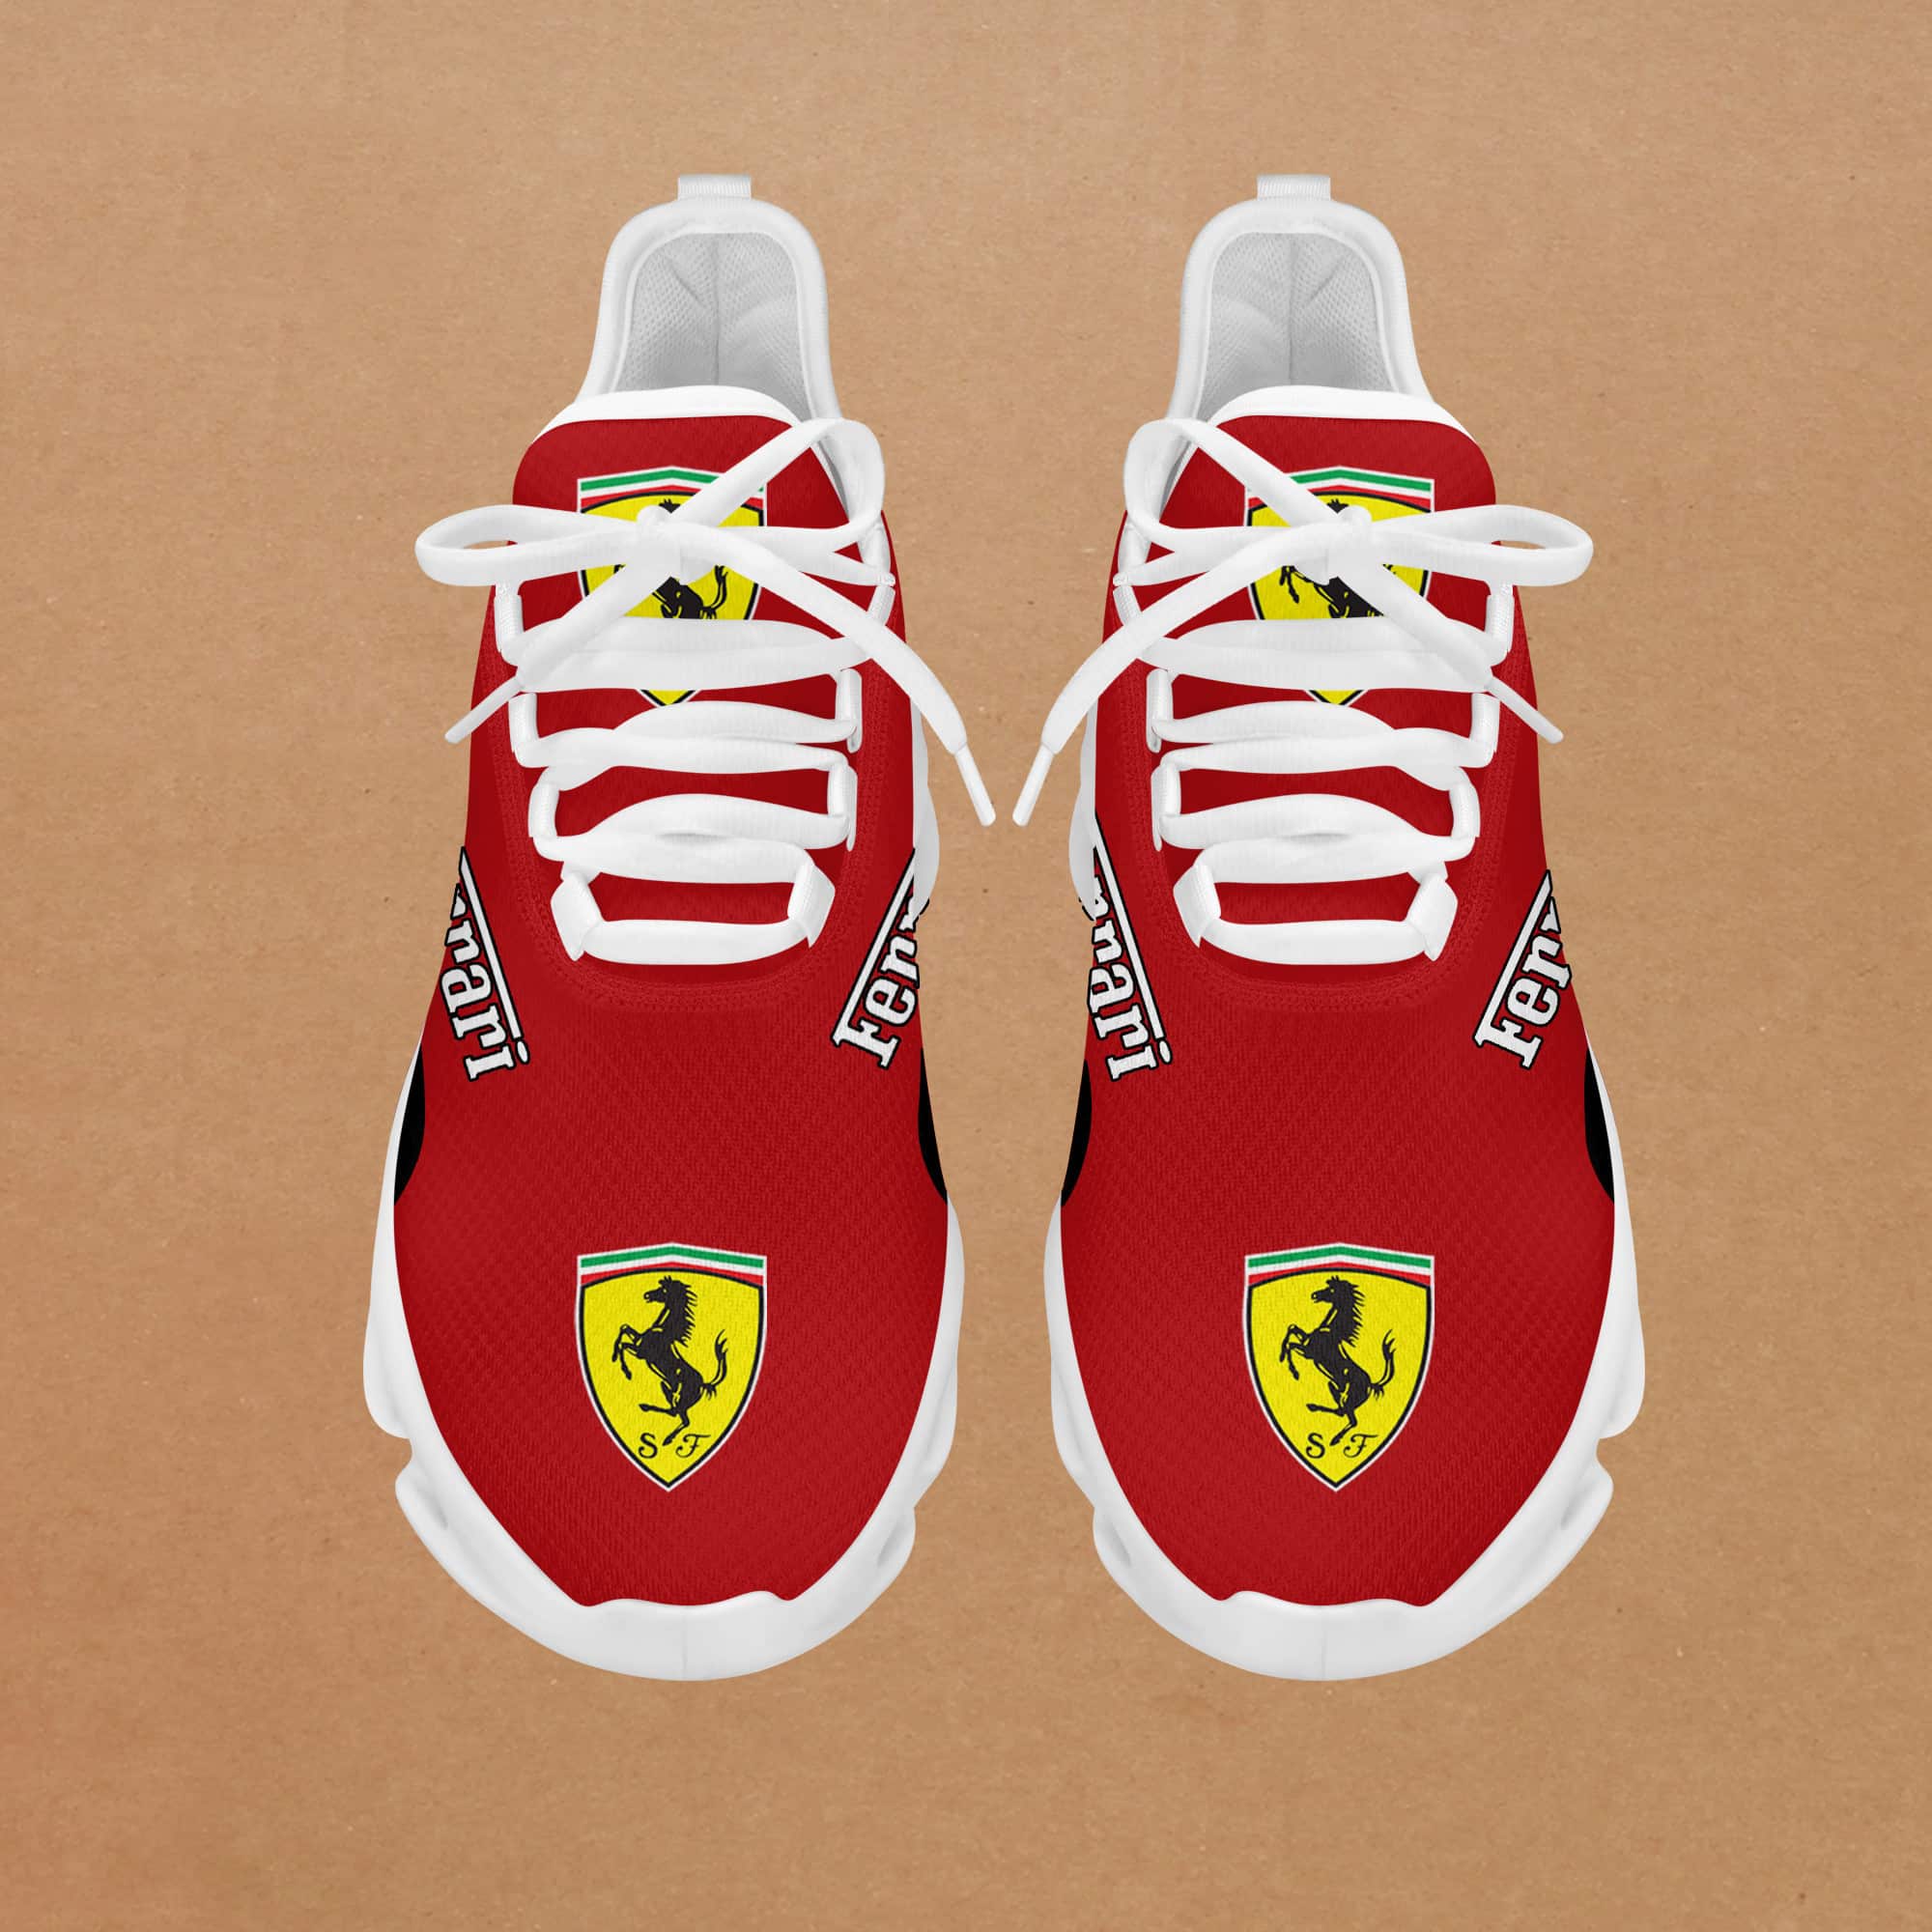 Ferrari Sneaker Running Shoes Max Soul Shoes Sneakers Ver 7 3